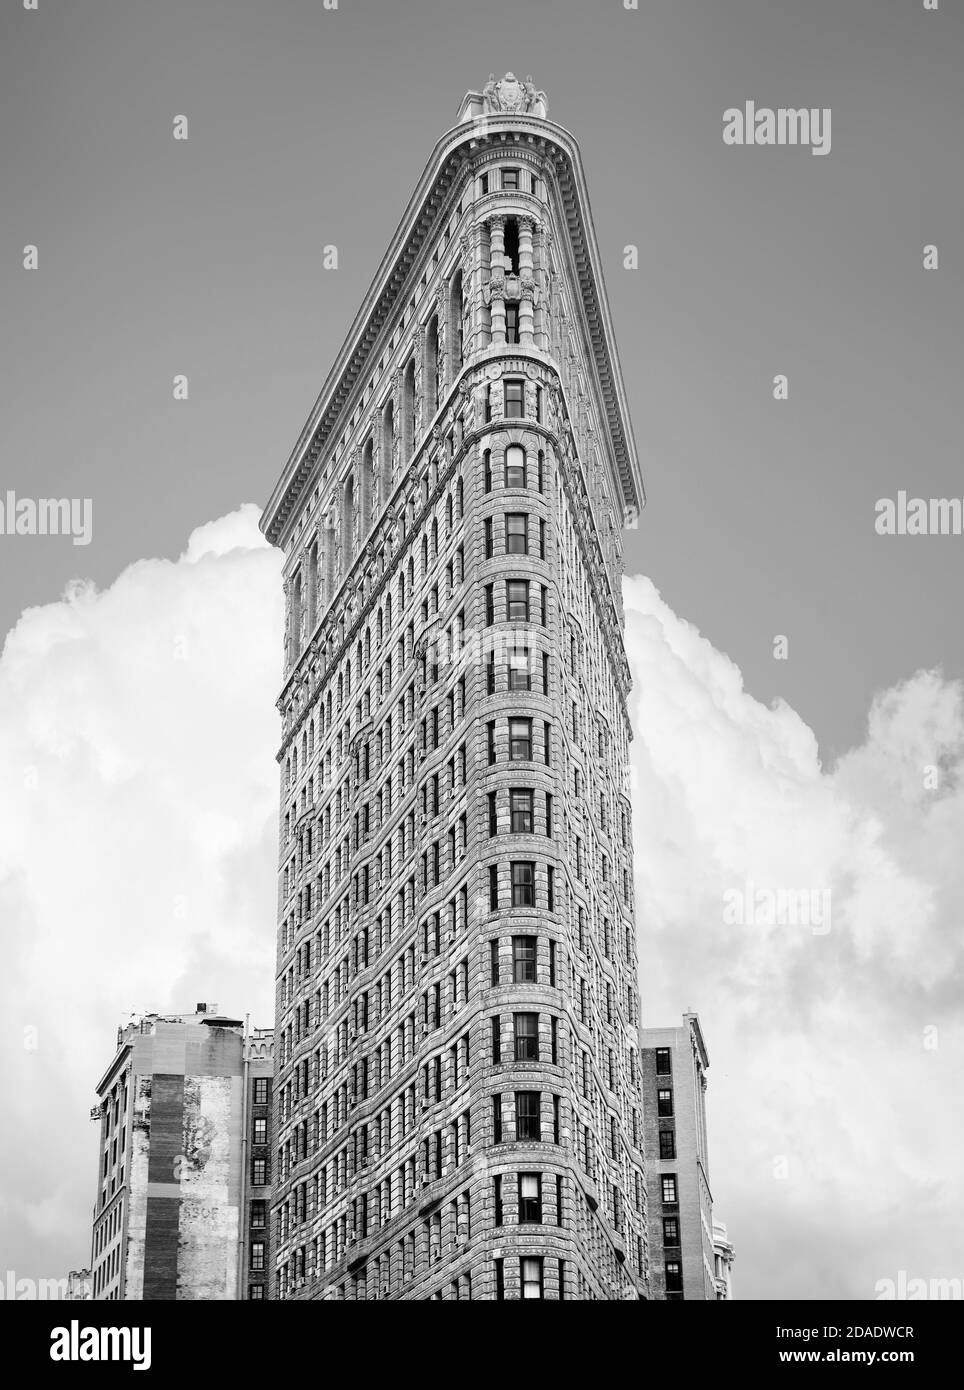 Bor Black and White Stock Photos & Images - Alamy